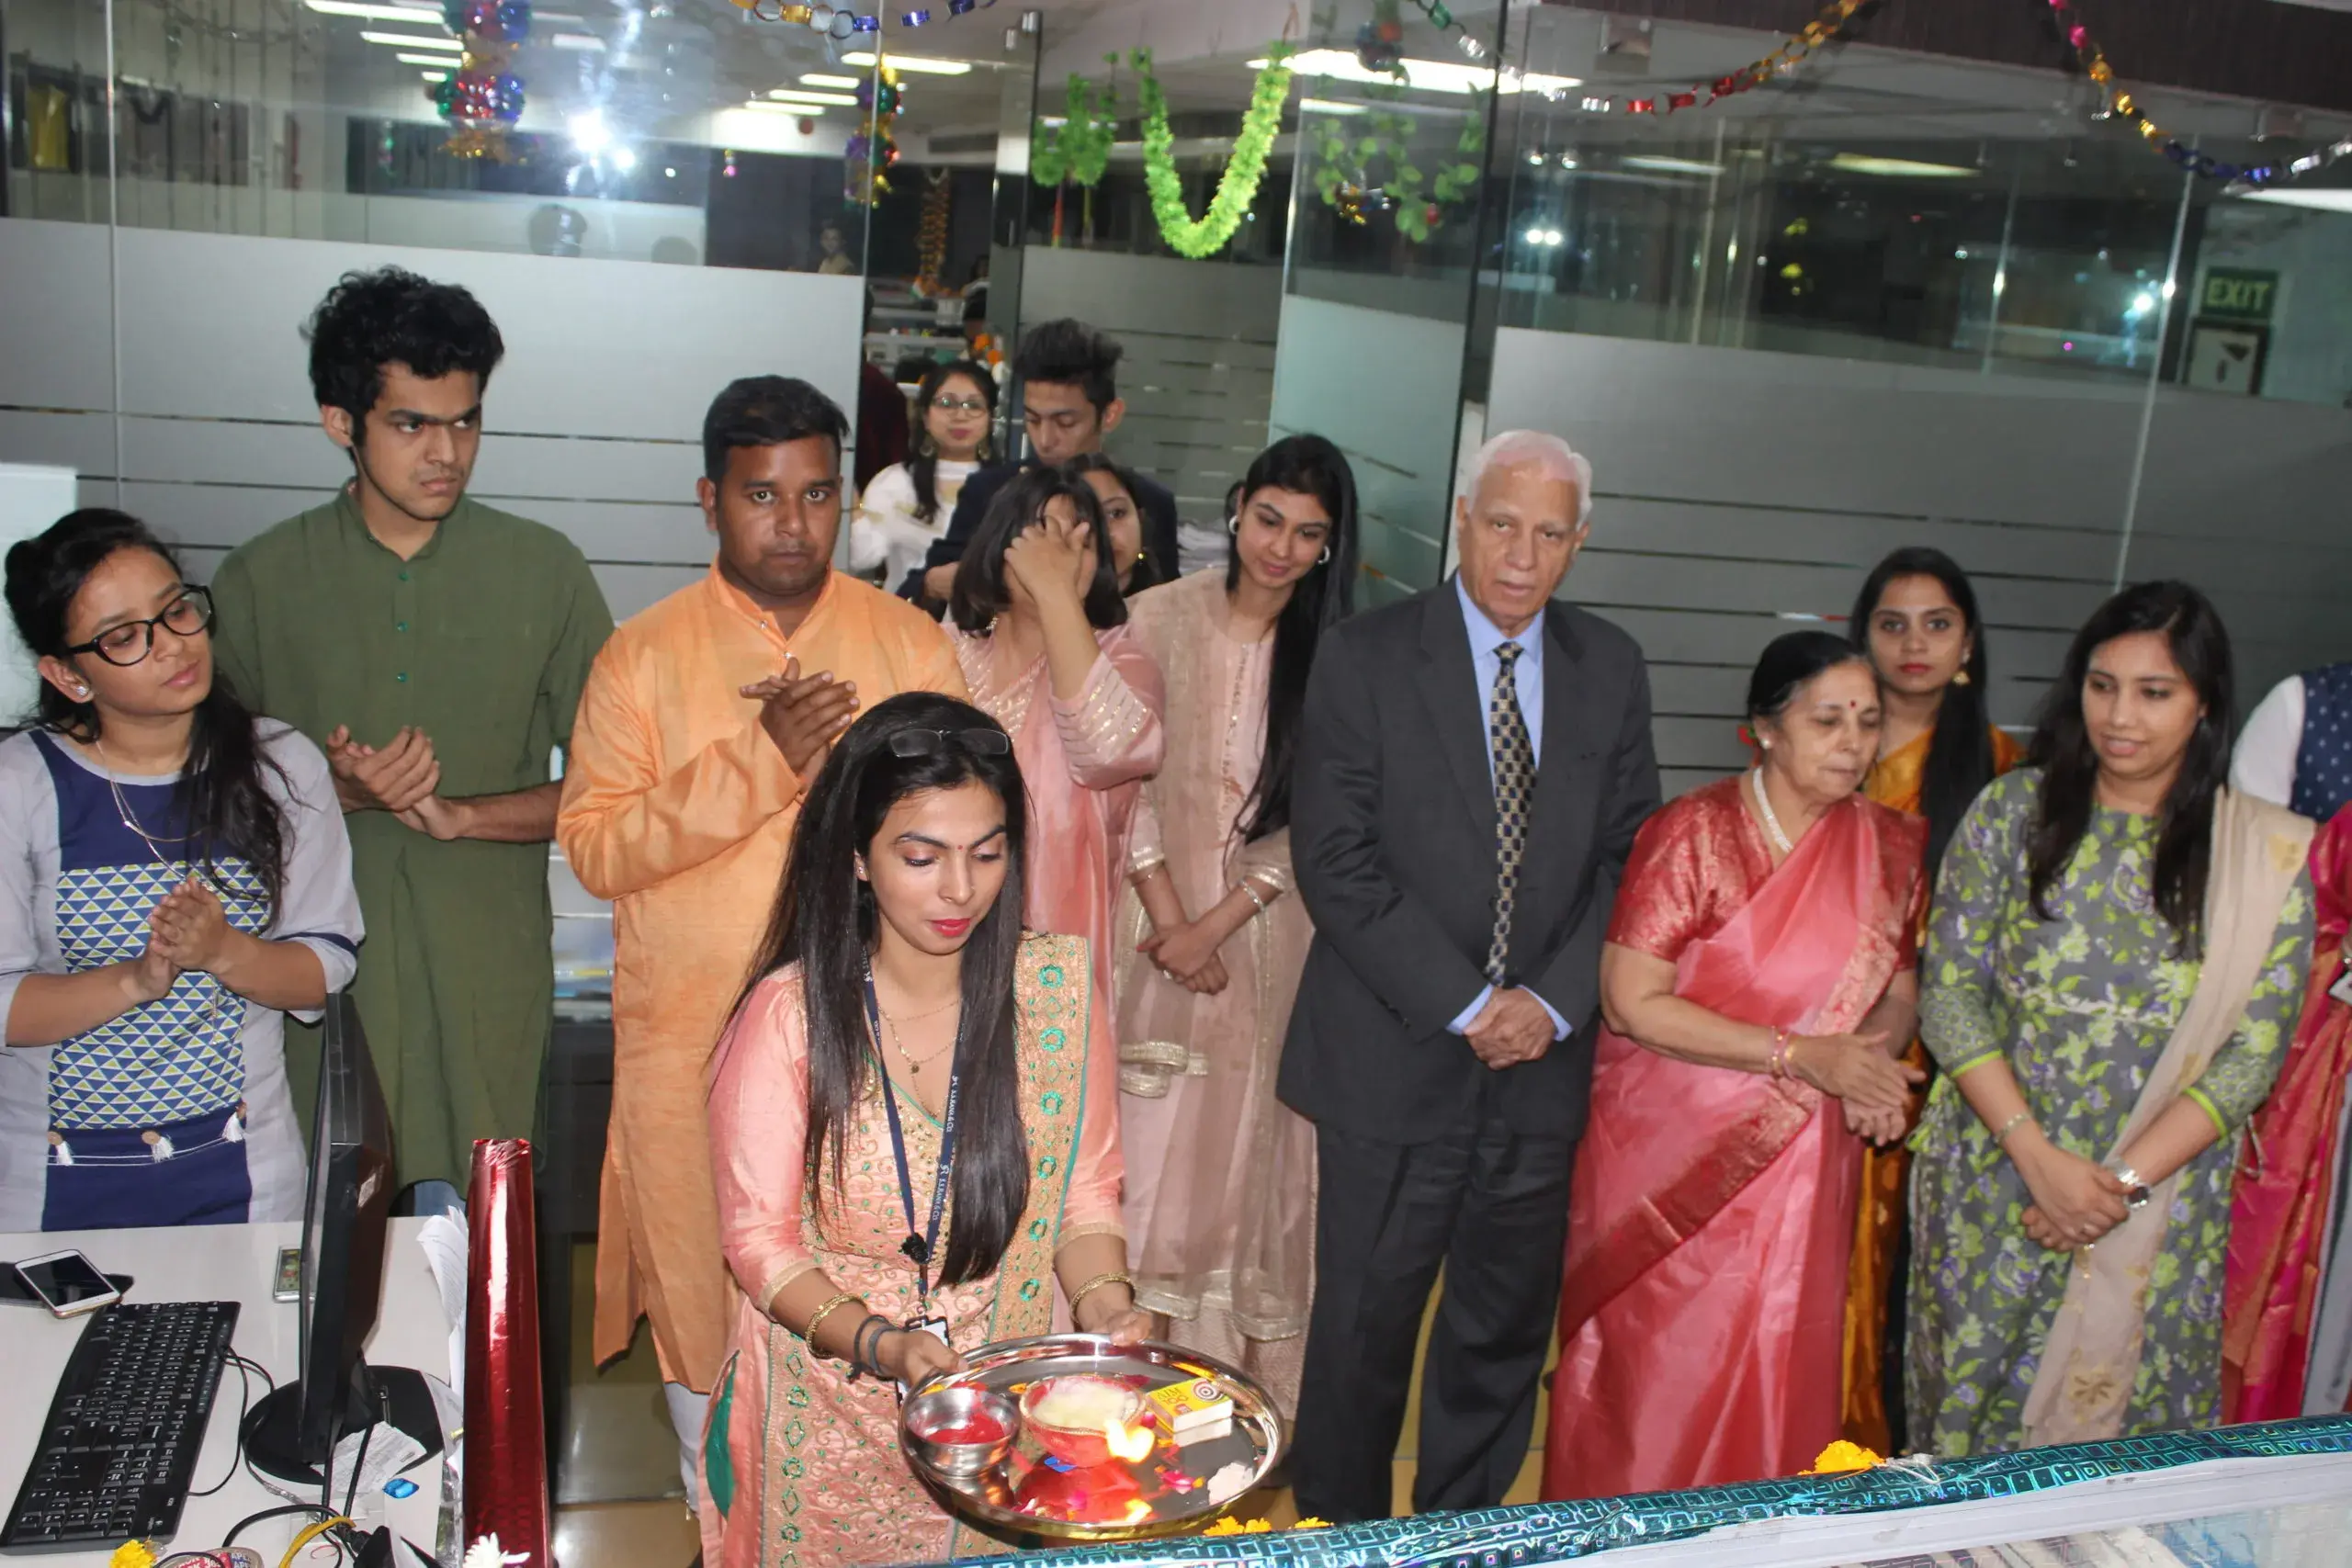 Kiran worshiping god on Diwali